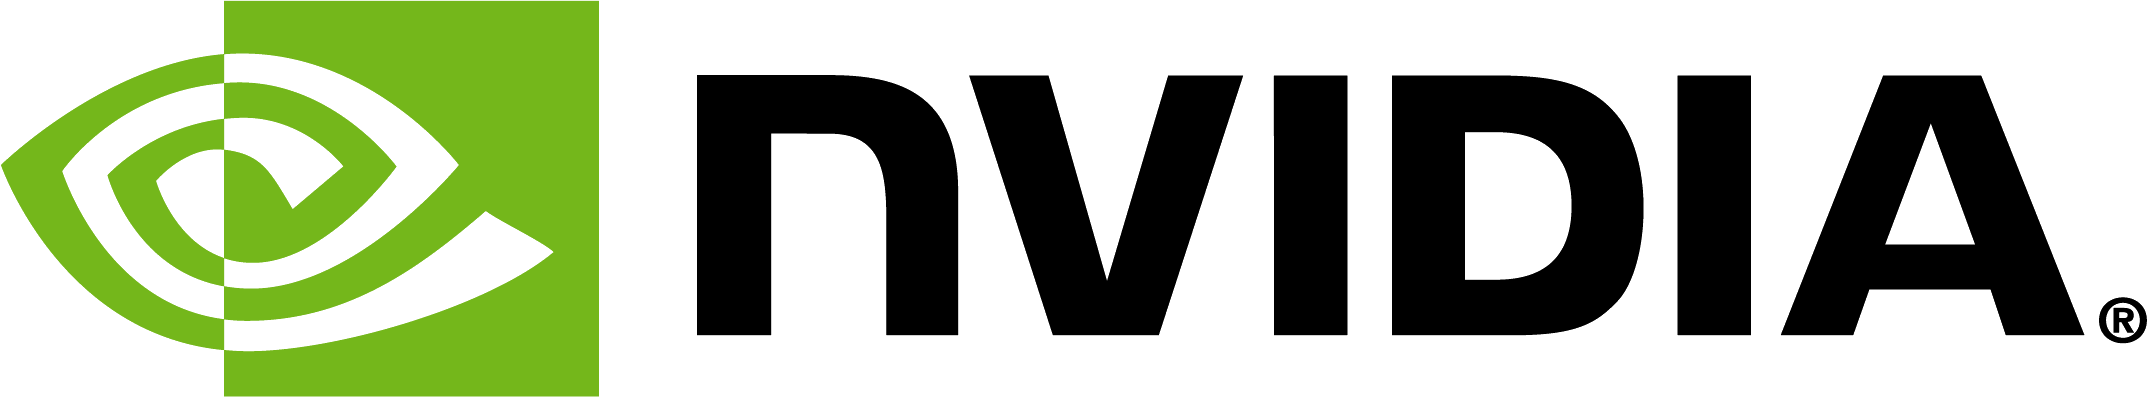 Nvidia Logo PNG Image